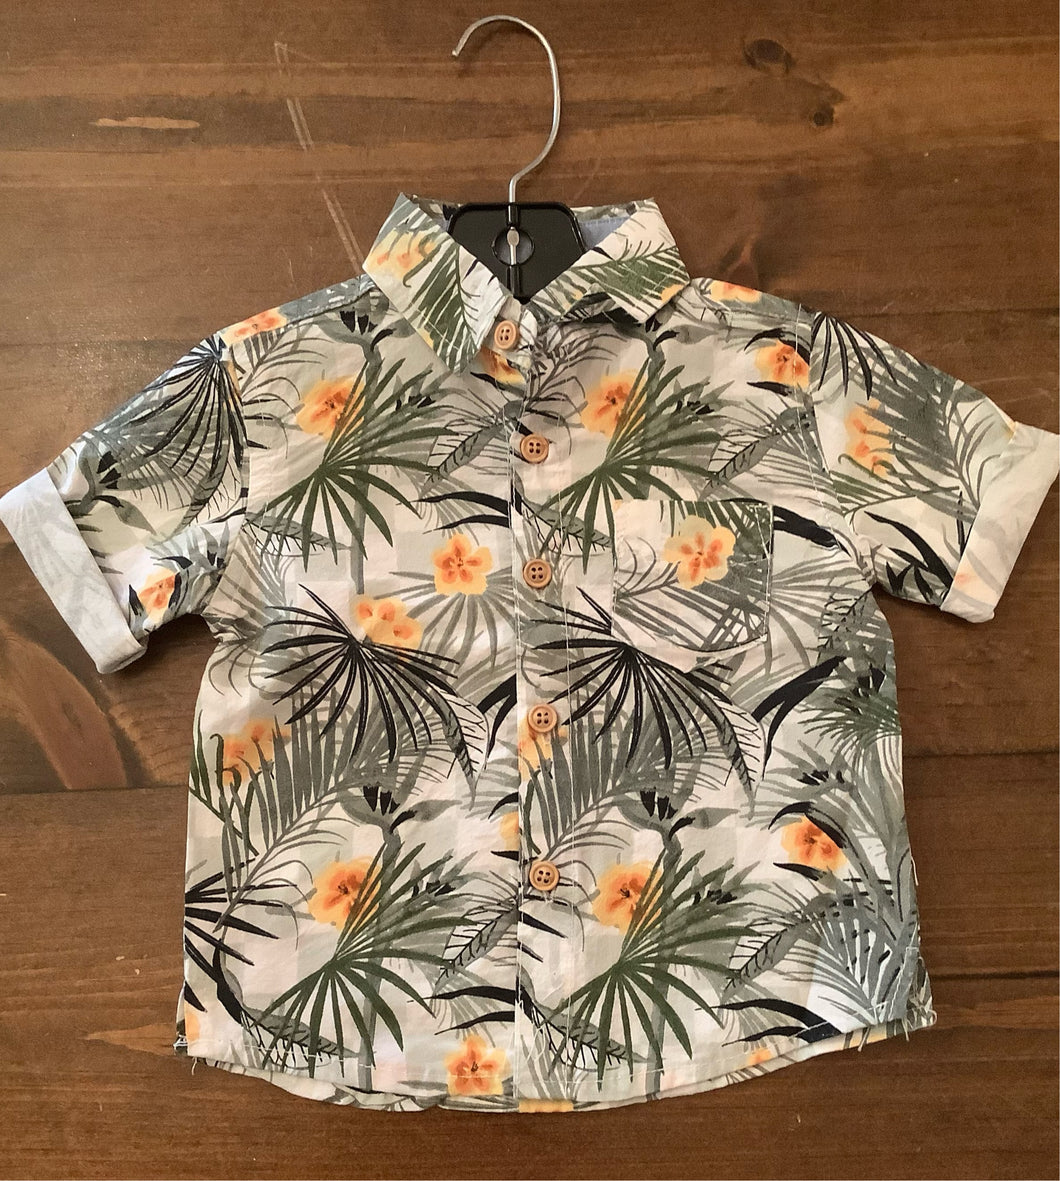 MID Baby Boy’s Short Sleeved Hawaiian Style Shirt: Sizes 3/6M to 24M